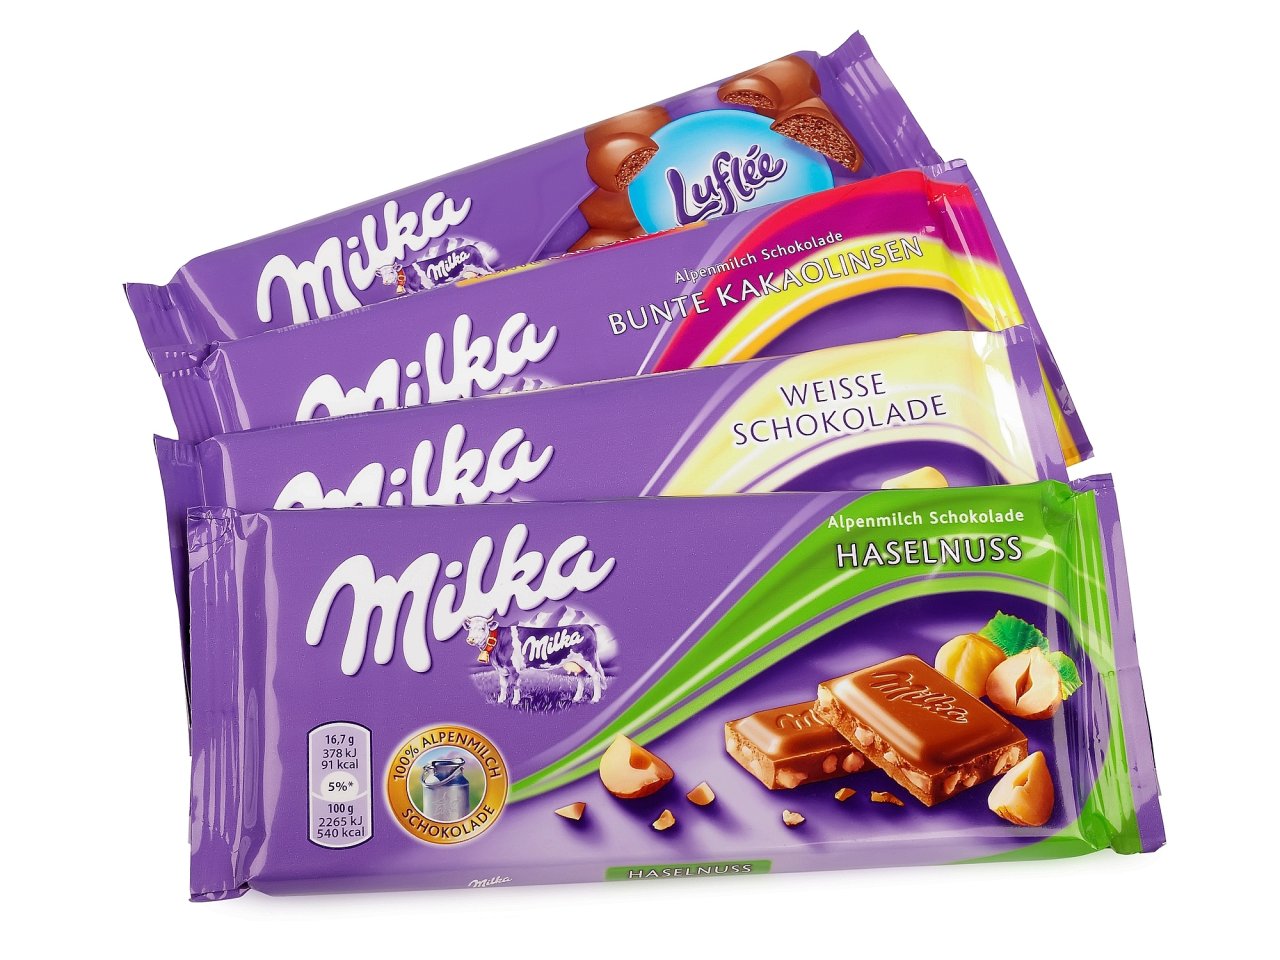 Milka: Immer weniger Tafel pro Schokolade